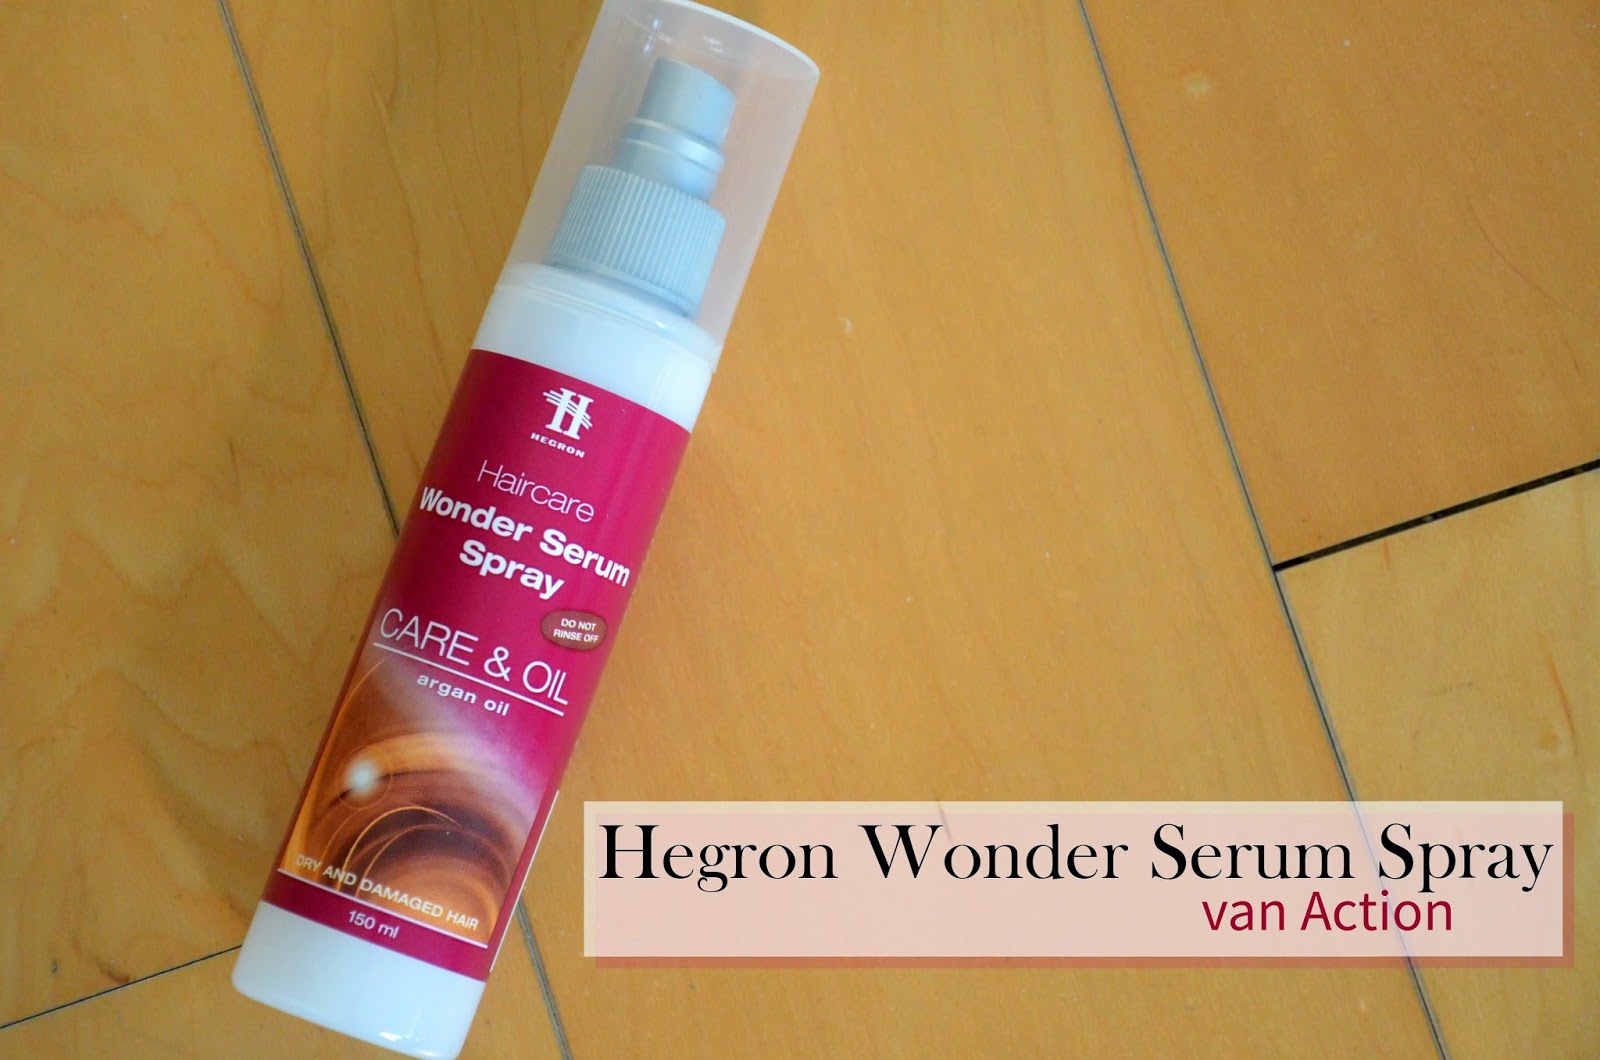 World Full Hegron Wonder Serum Spray van Action | Review